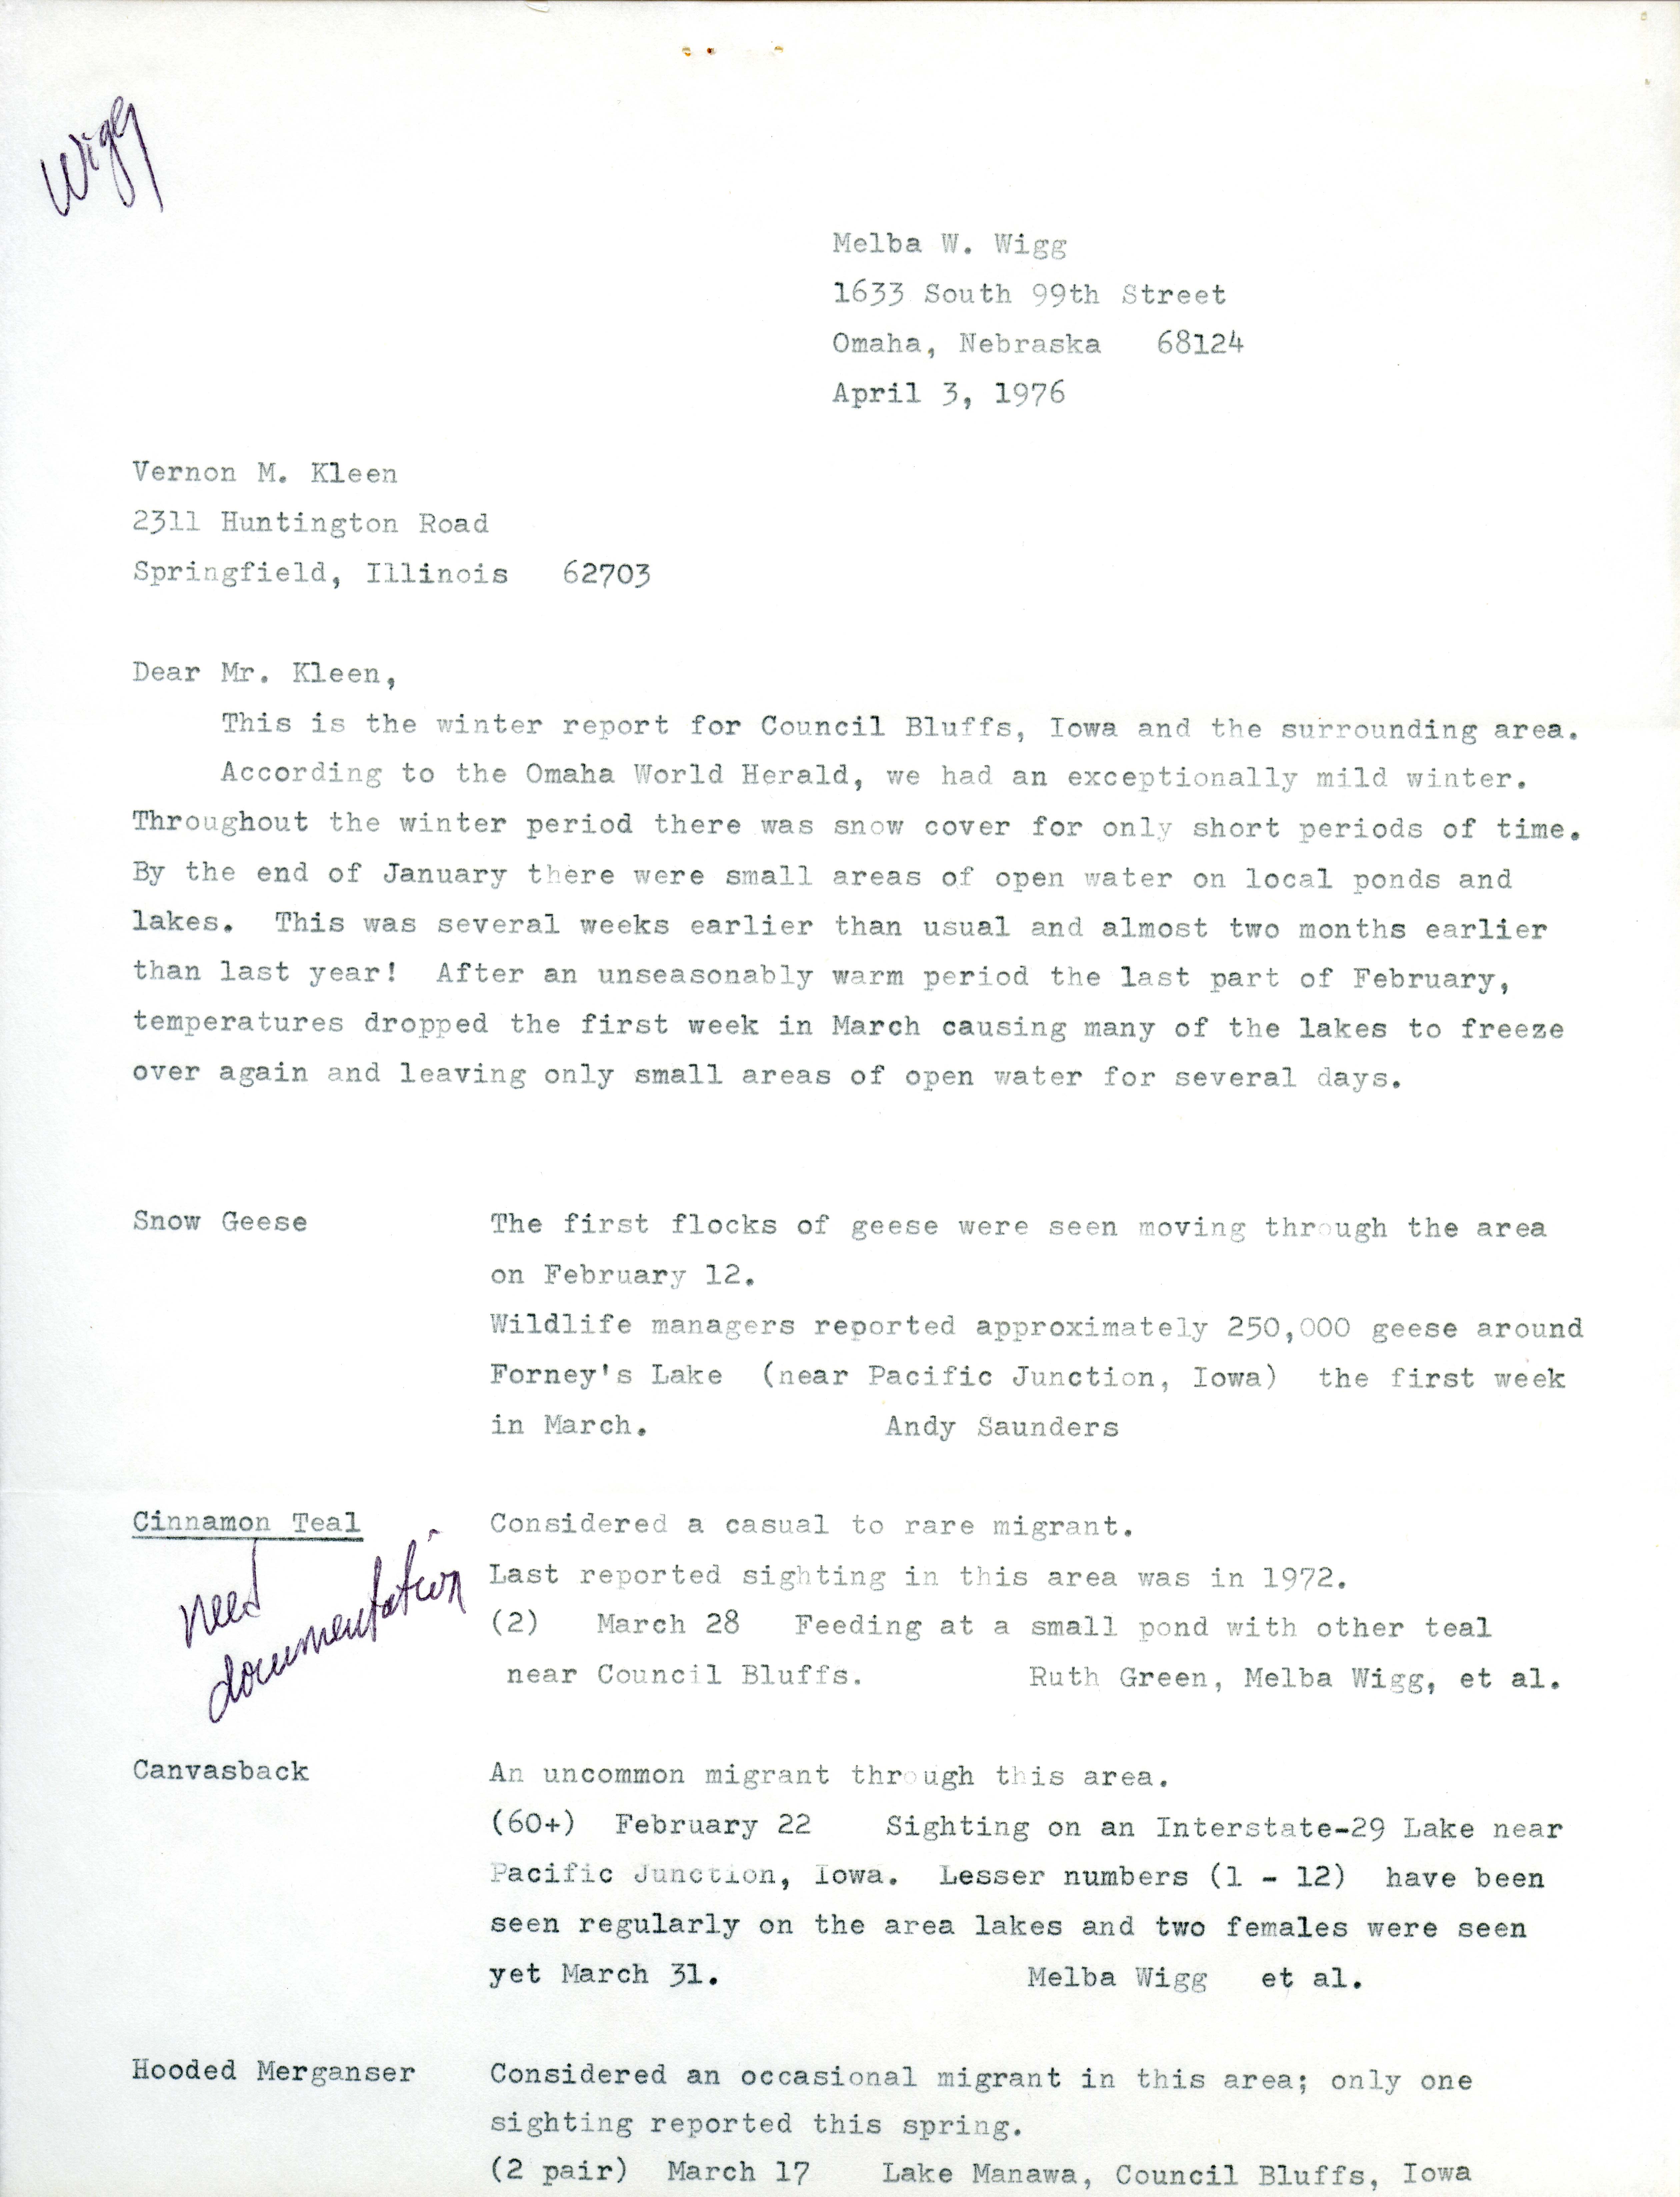 Melba Wigg letter to Vernon M. Kleen regarding winter bird observations for the Council Bluffs area, April 3, 1976